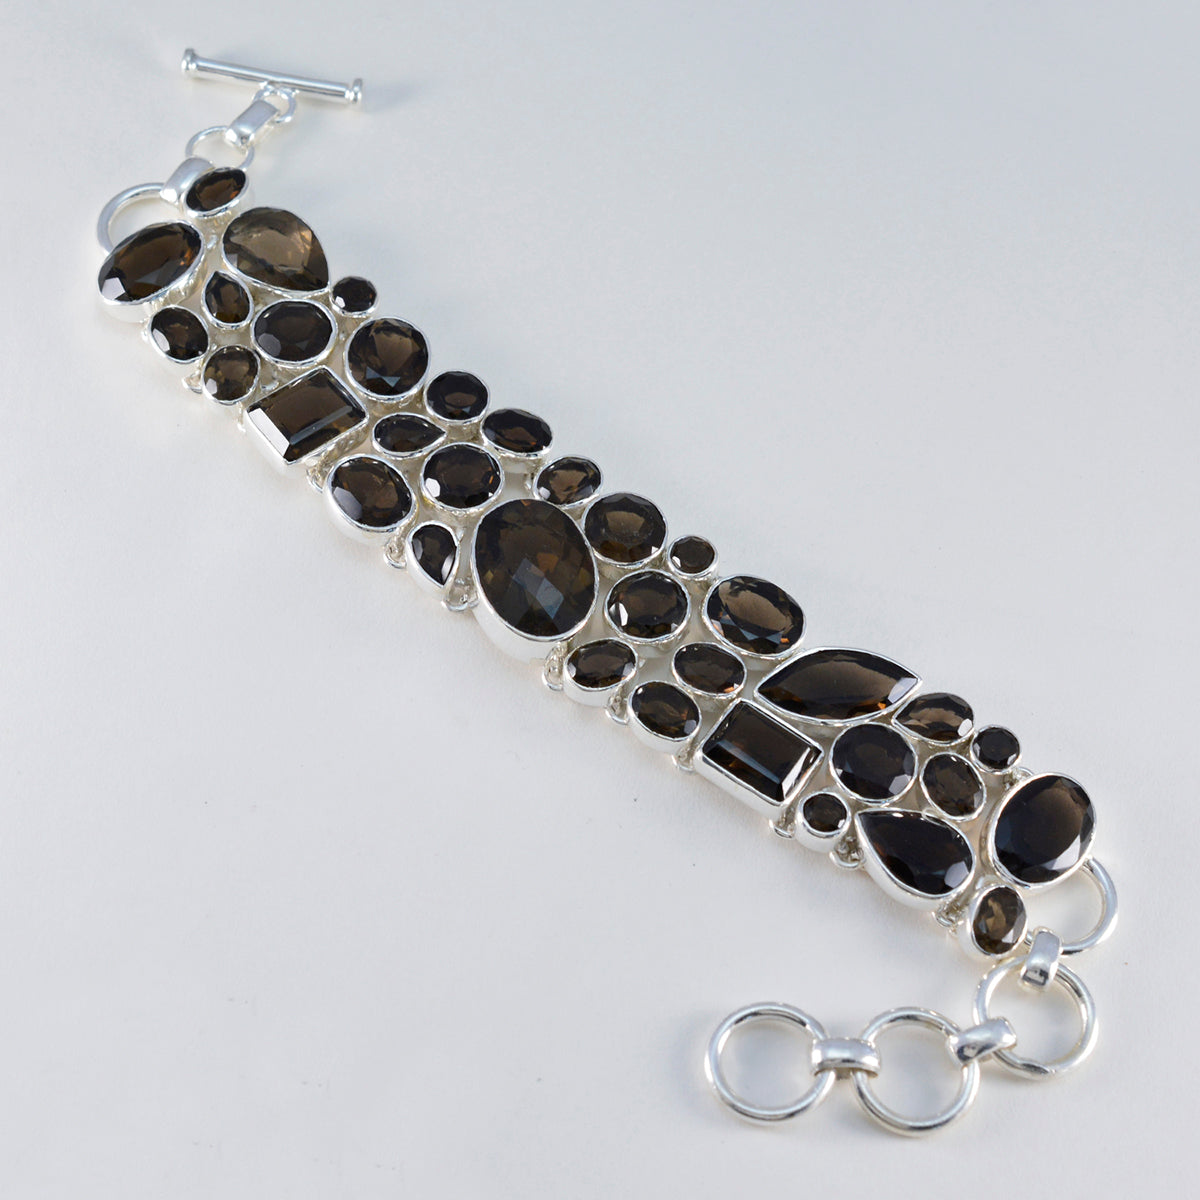 Riyo Charmante 925 sterling zilveren armband voor meisjes, rookkwartsarmband, bezel-instellingsarmband met schakelbedelarmband, maat L, 6-8,5 inch.